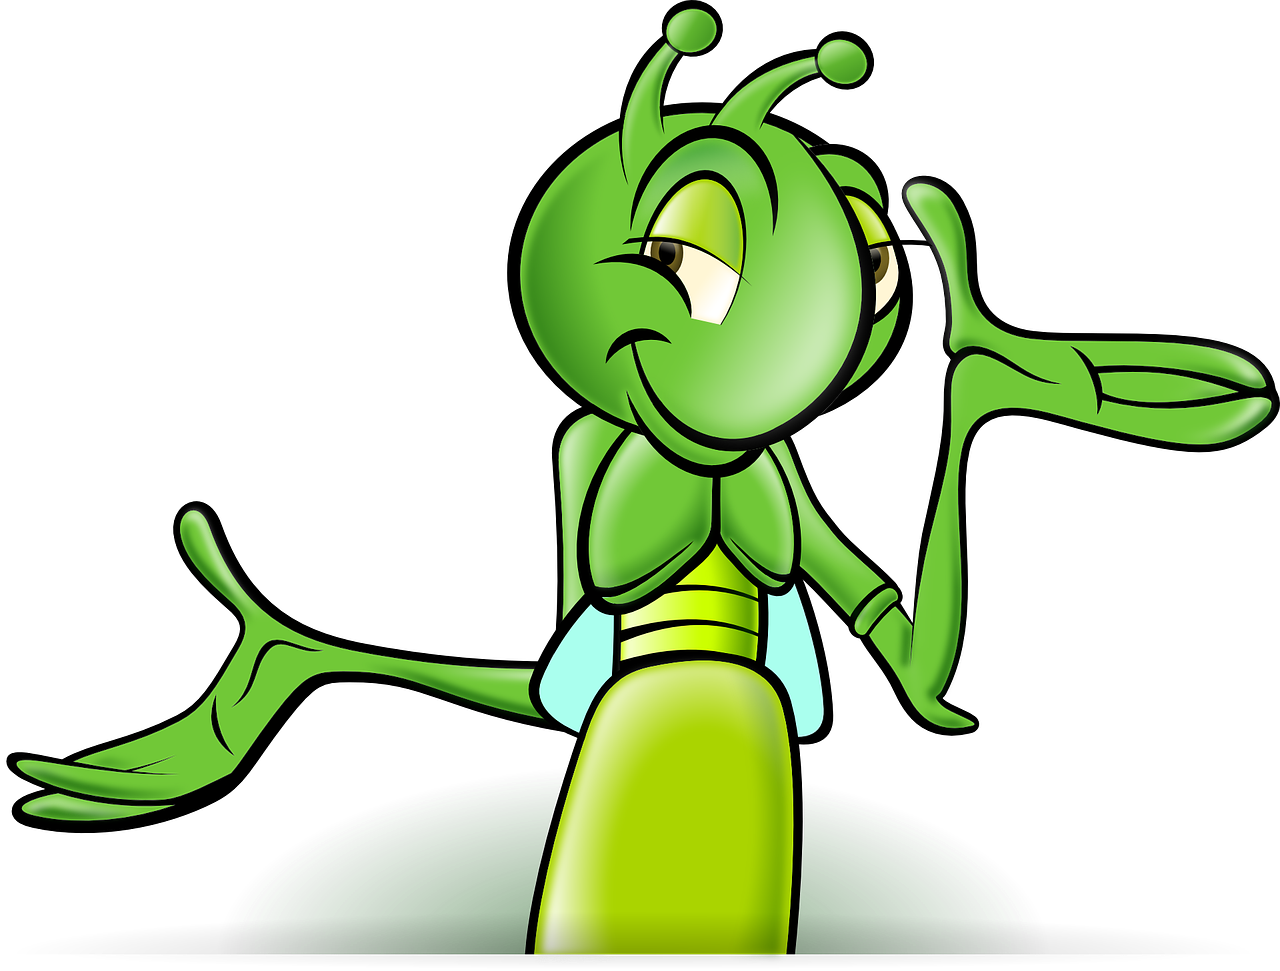 Grasshopper character